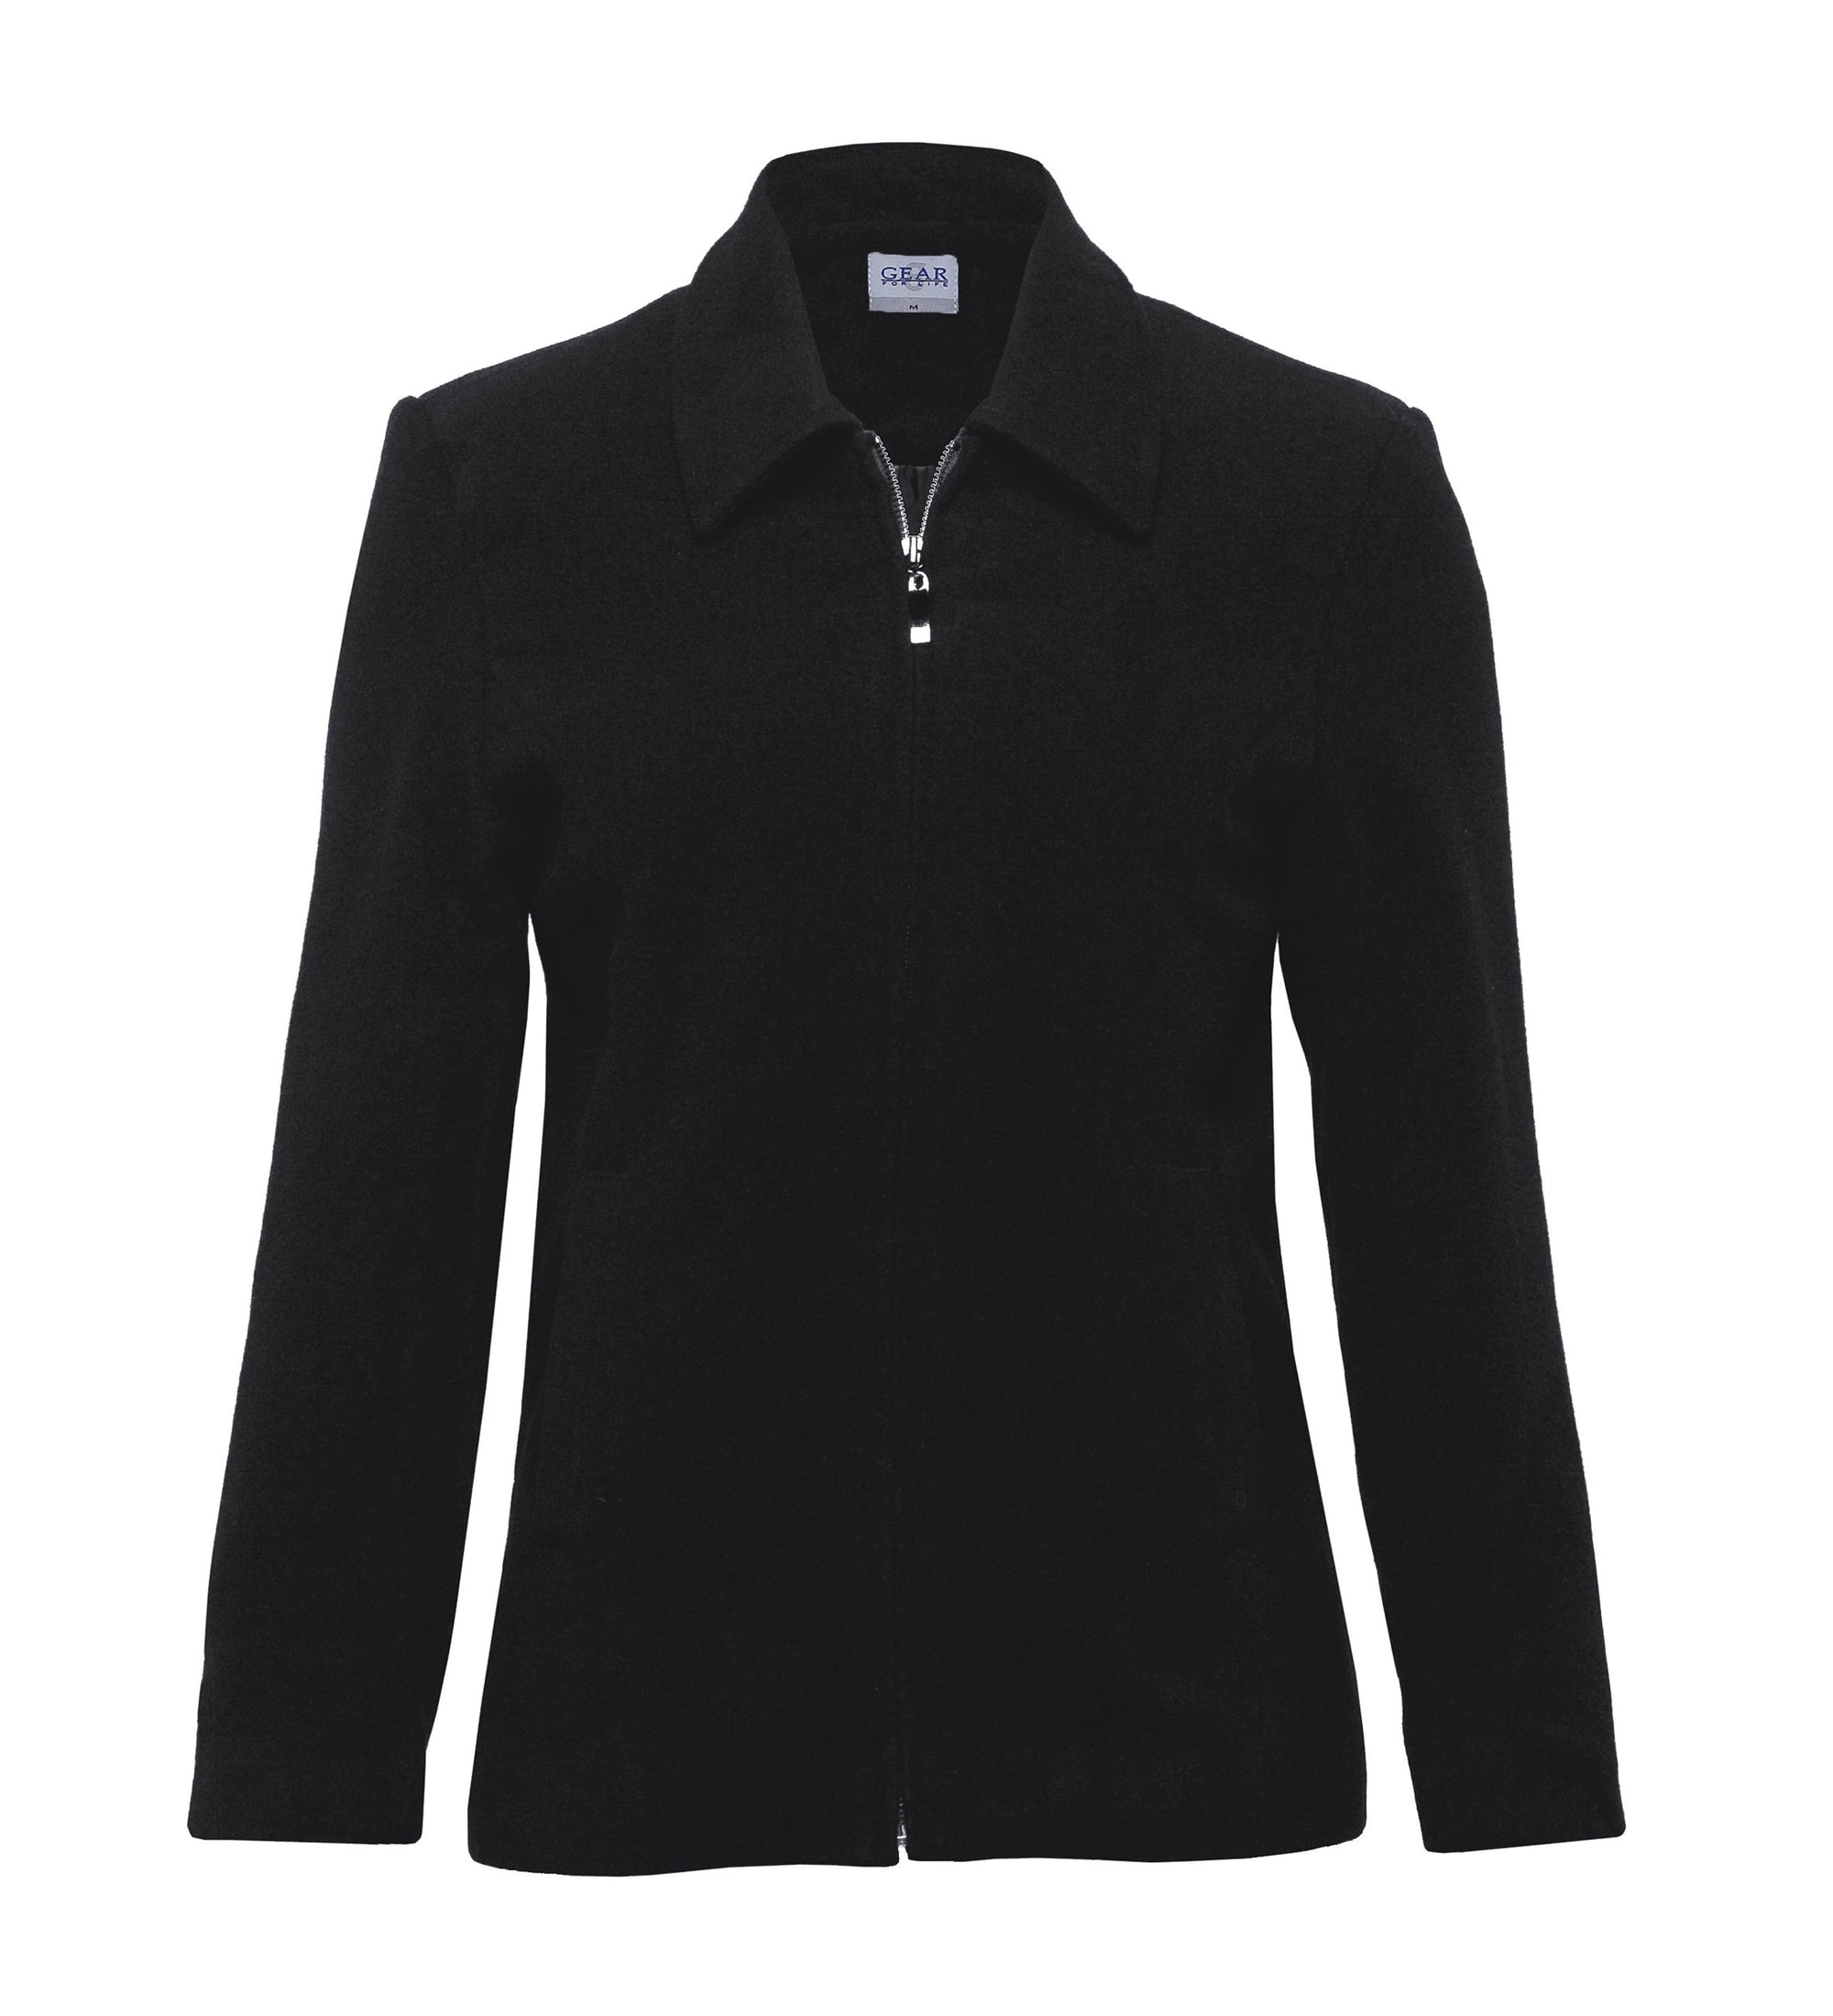 the-catalogue-ladis-womens-melton-wool-jackets-wmwj-colour-black